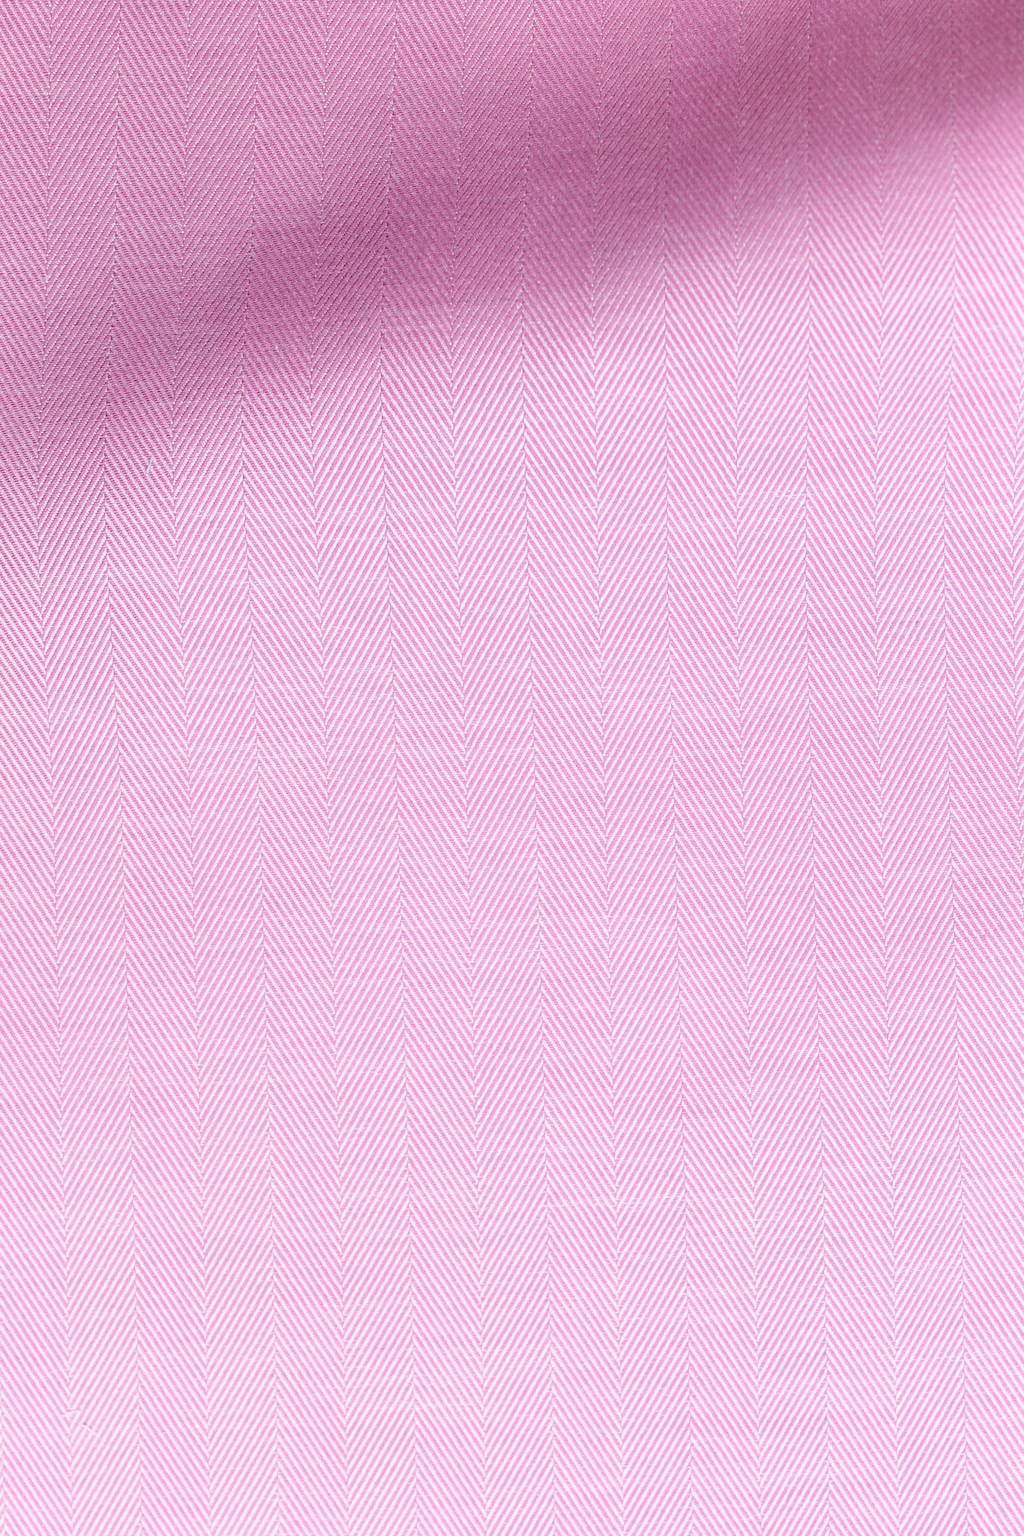 6695 Pink Chevron.JPG